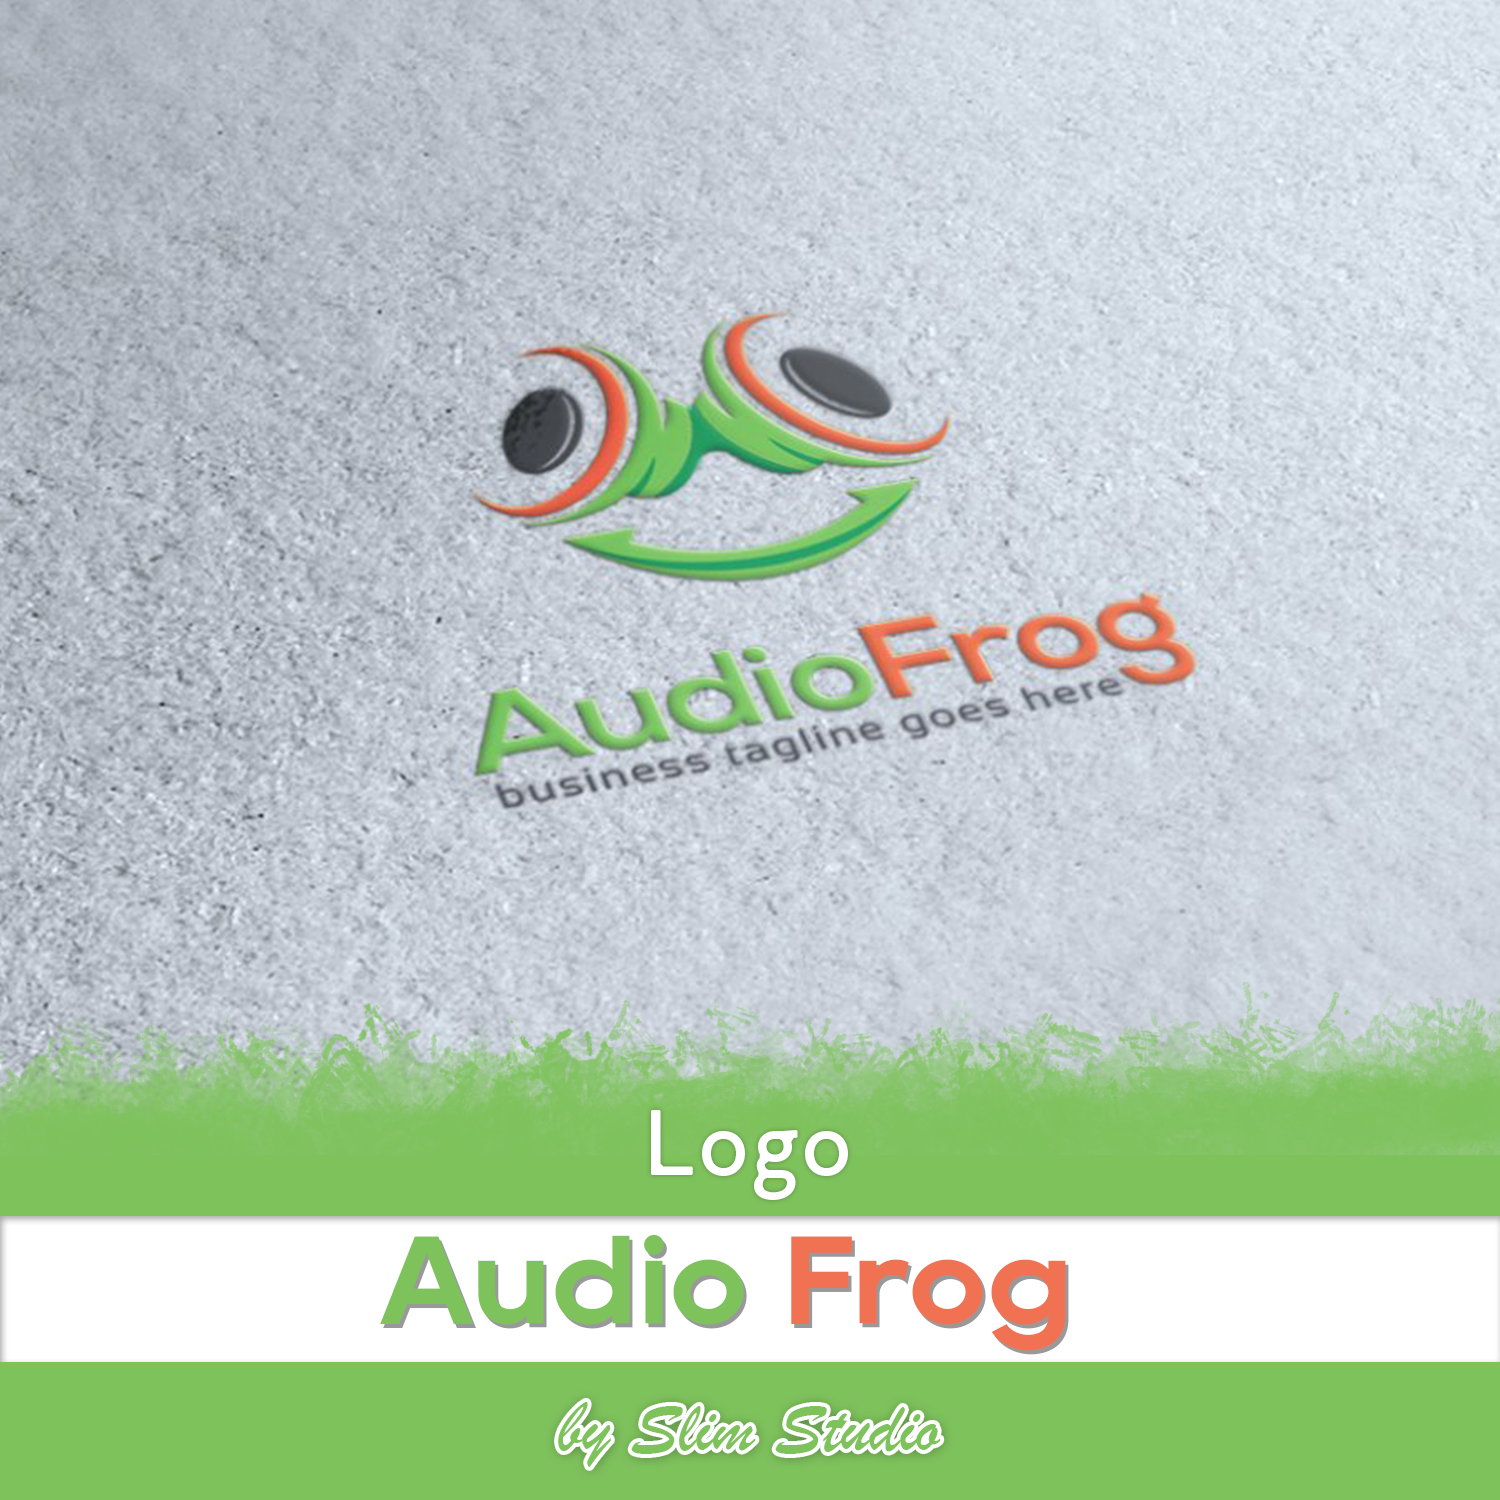 Audio Frog Logo cover.